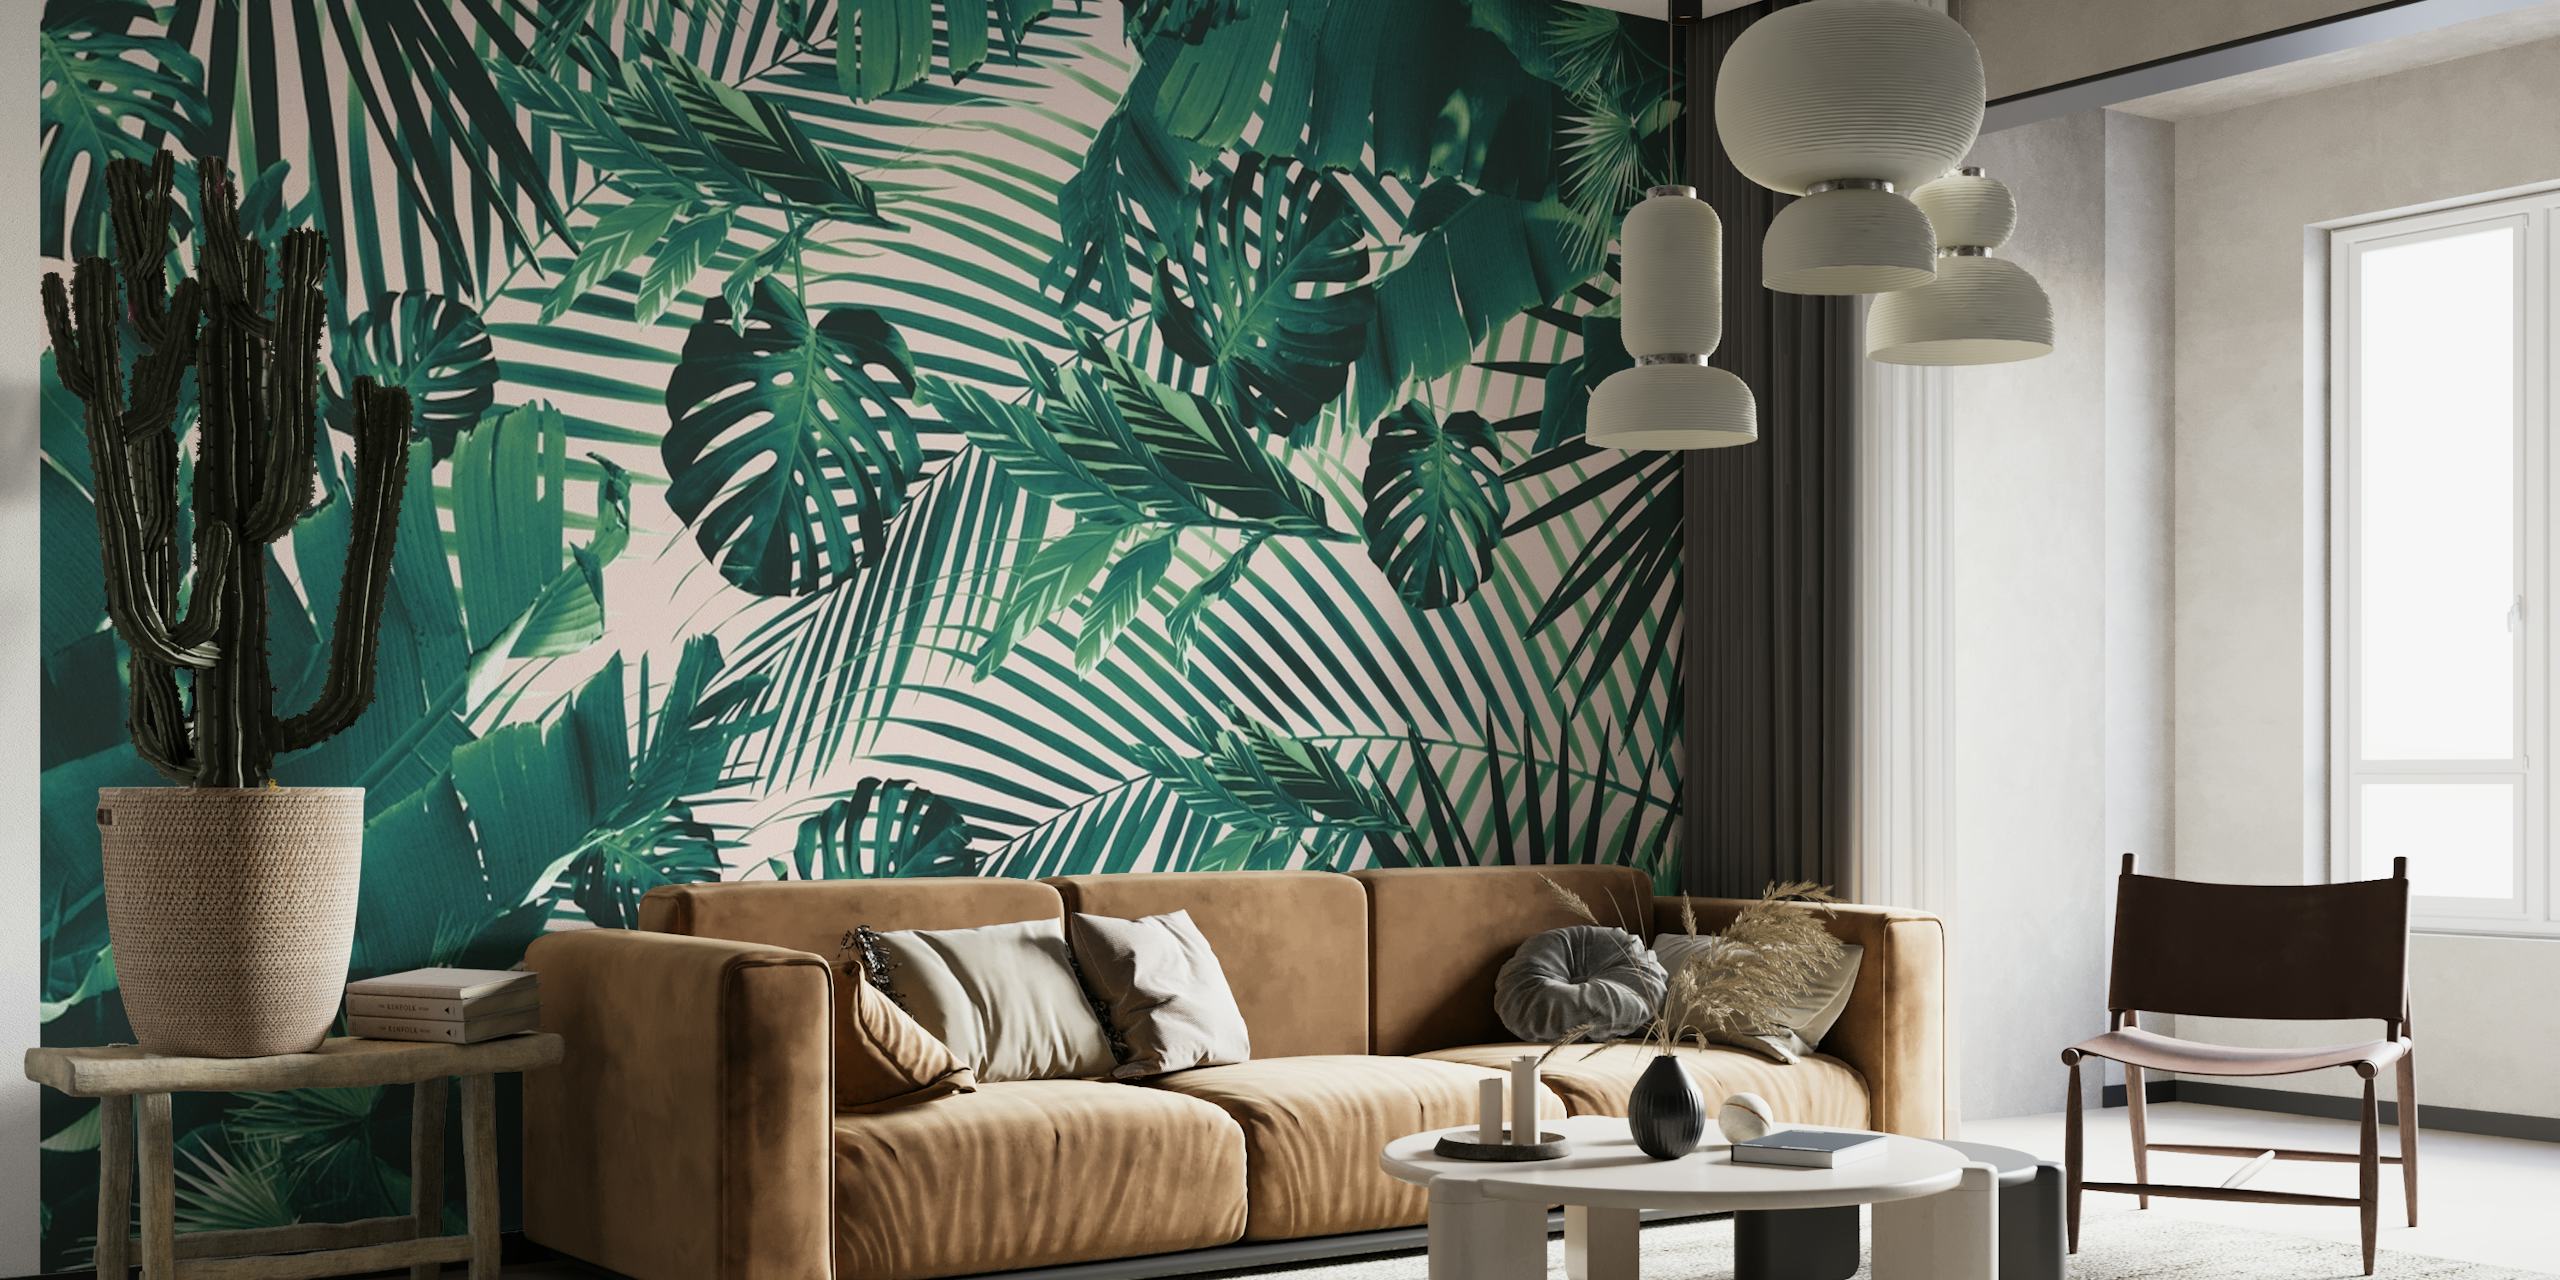 Tropical Jungle Siesta 2a wallpaper